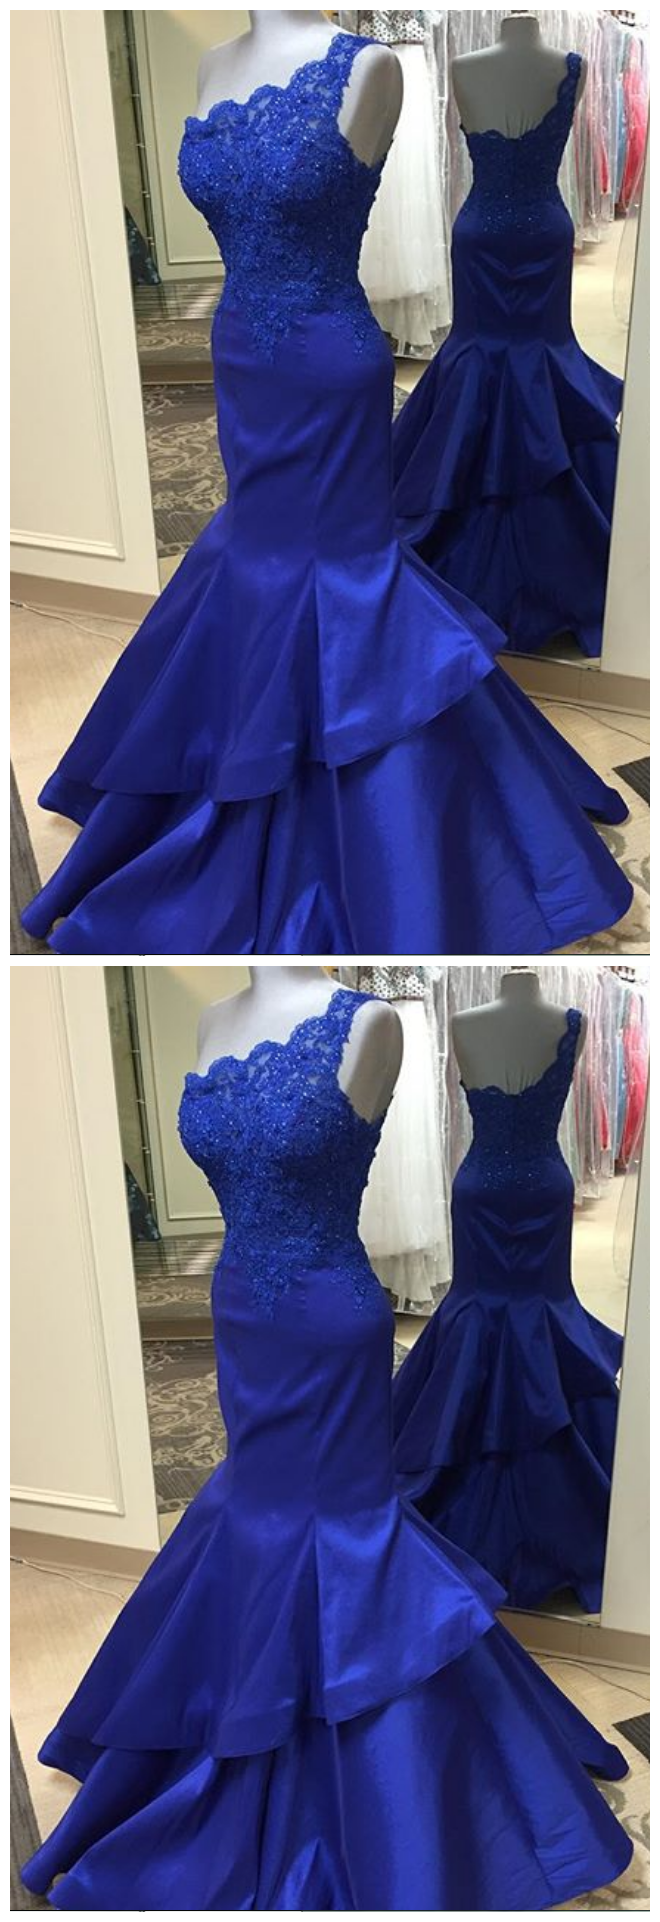 Prom Dresses, Sexy Mermaid Prom Dress, Royal Blue Prom Dresses, Prom Dress With Ruffles, Lace Prom Dresses Long, One Shoulder Prom Dress, Prom